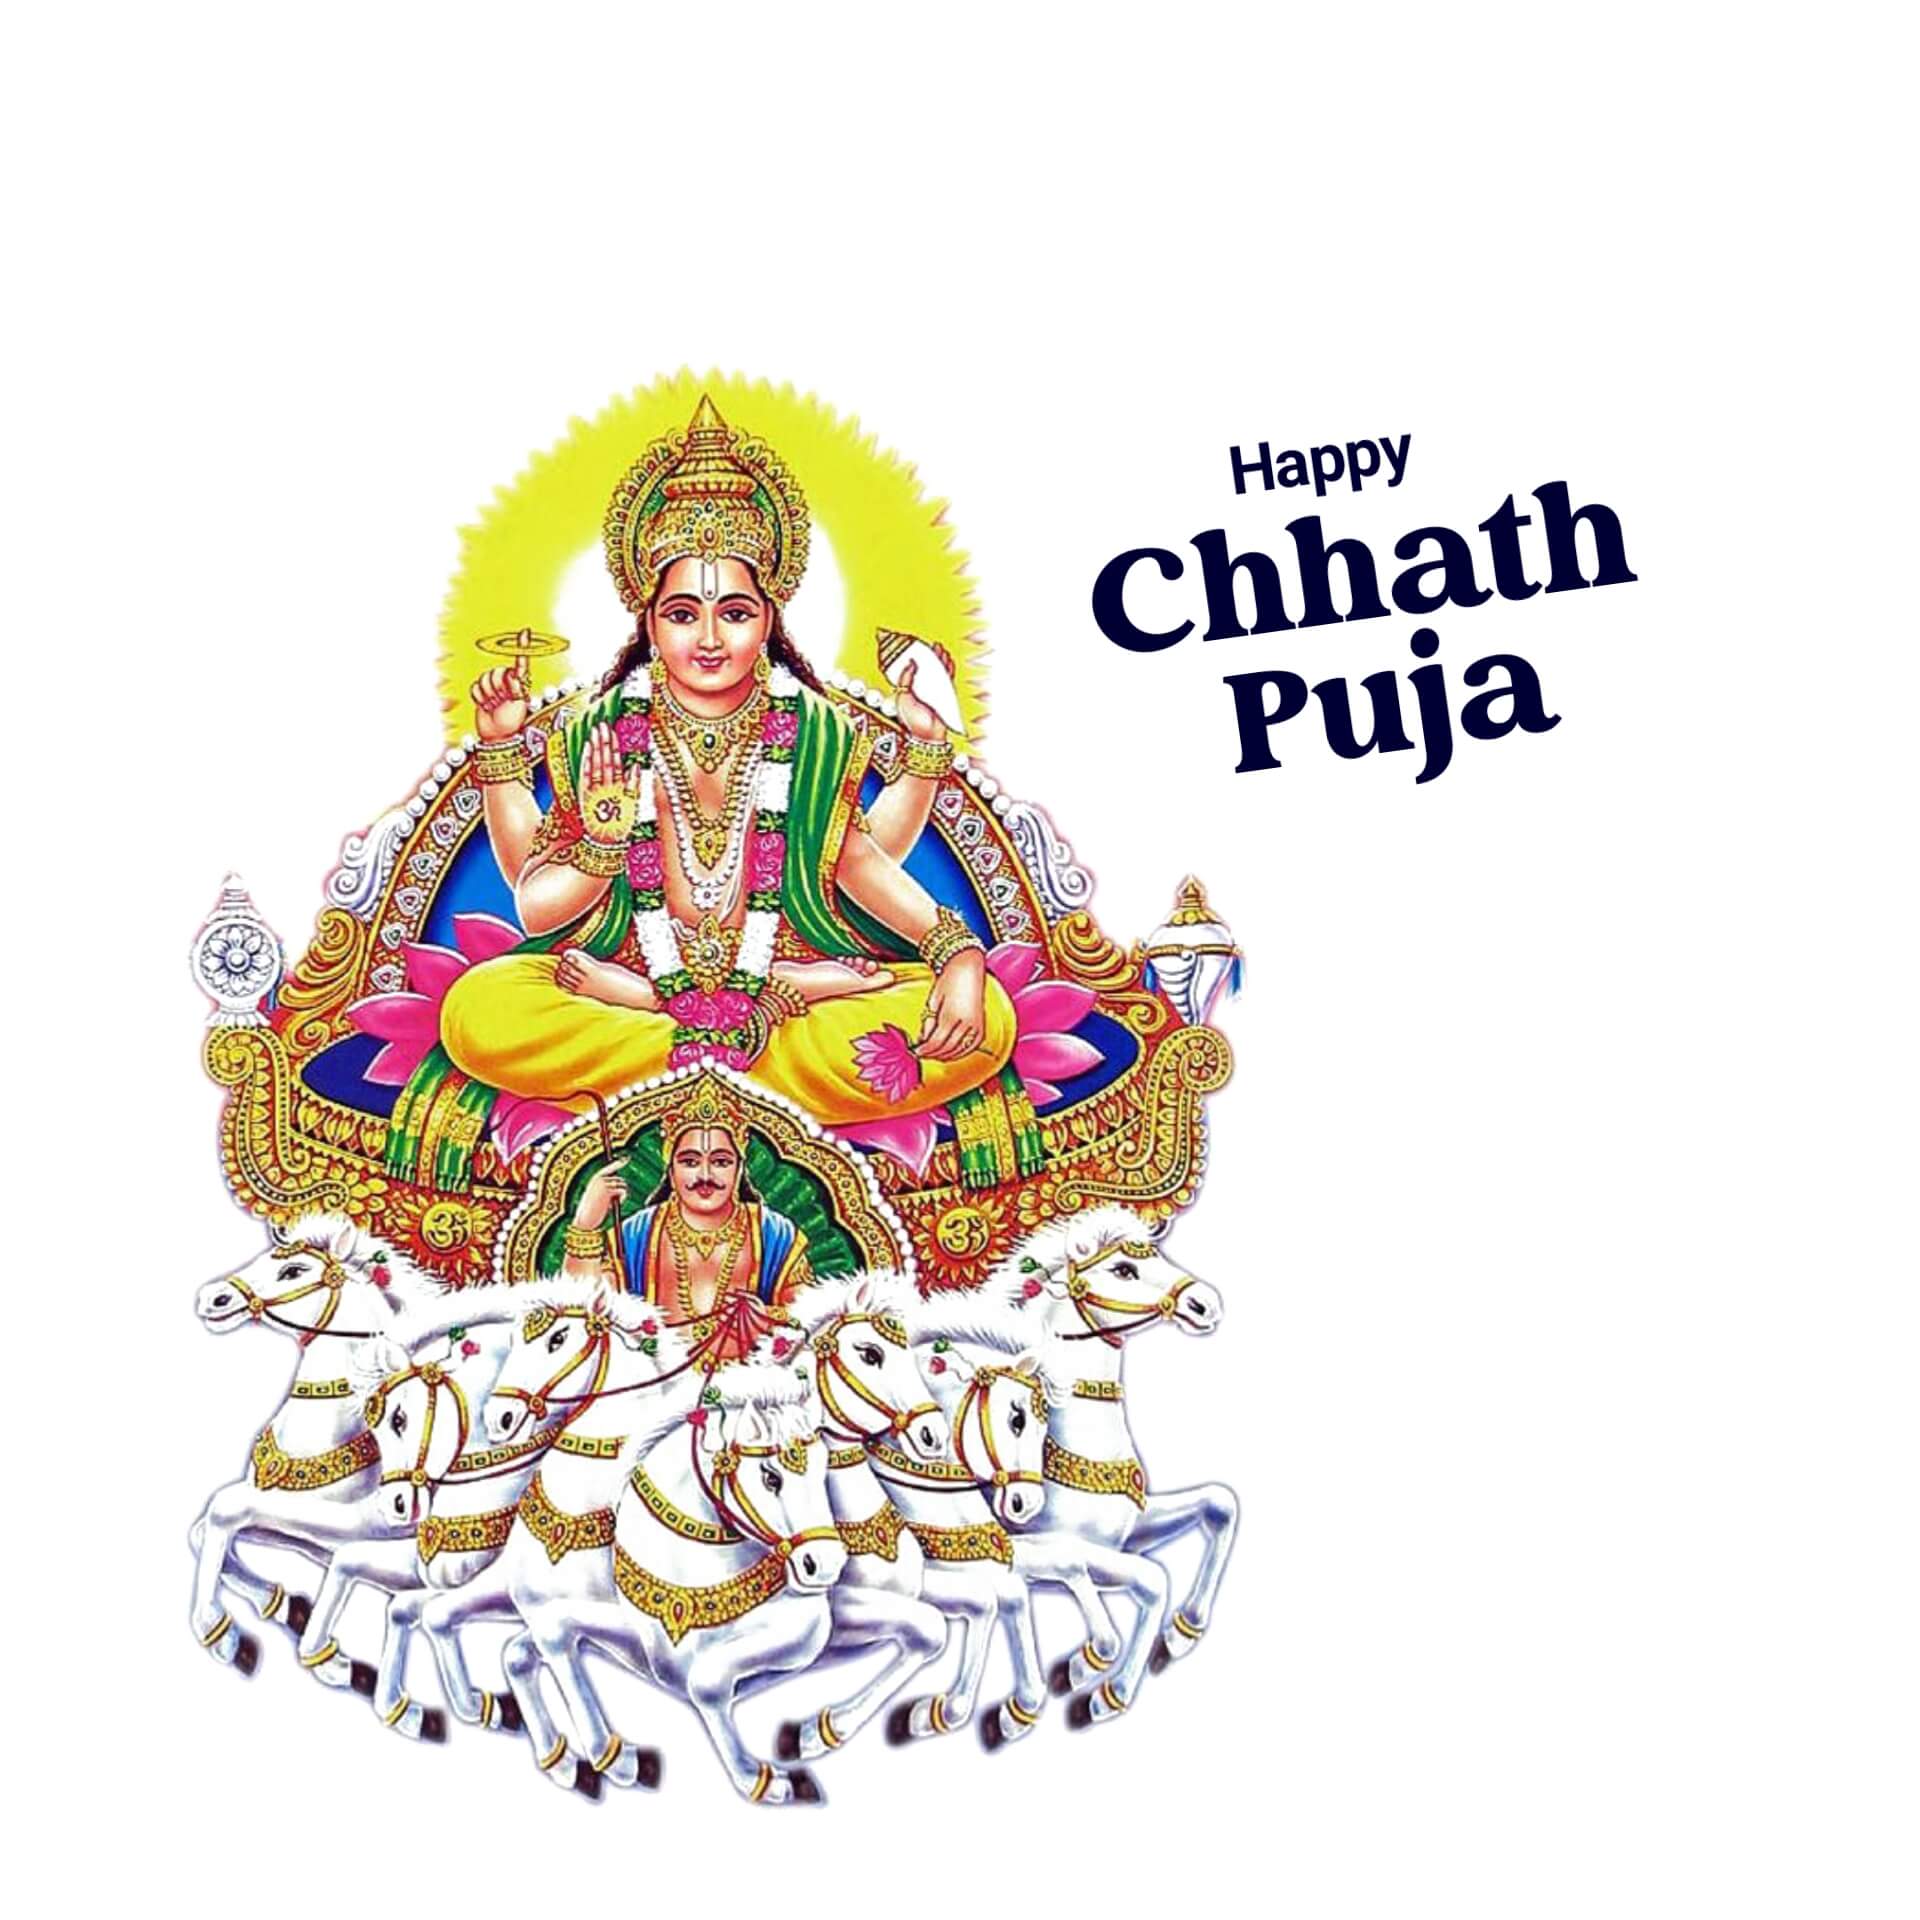 Happy Chhath Puja Image